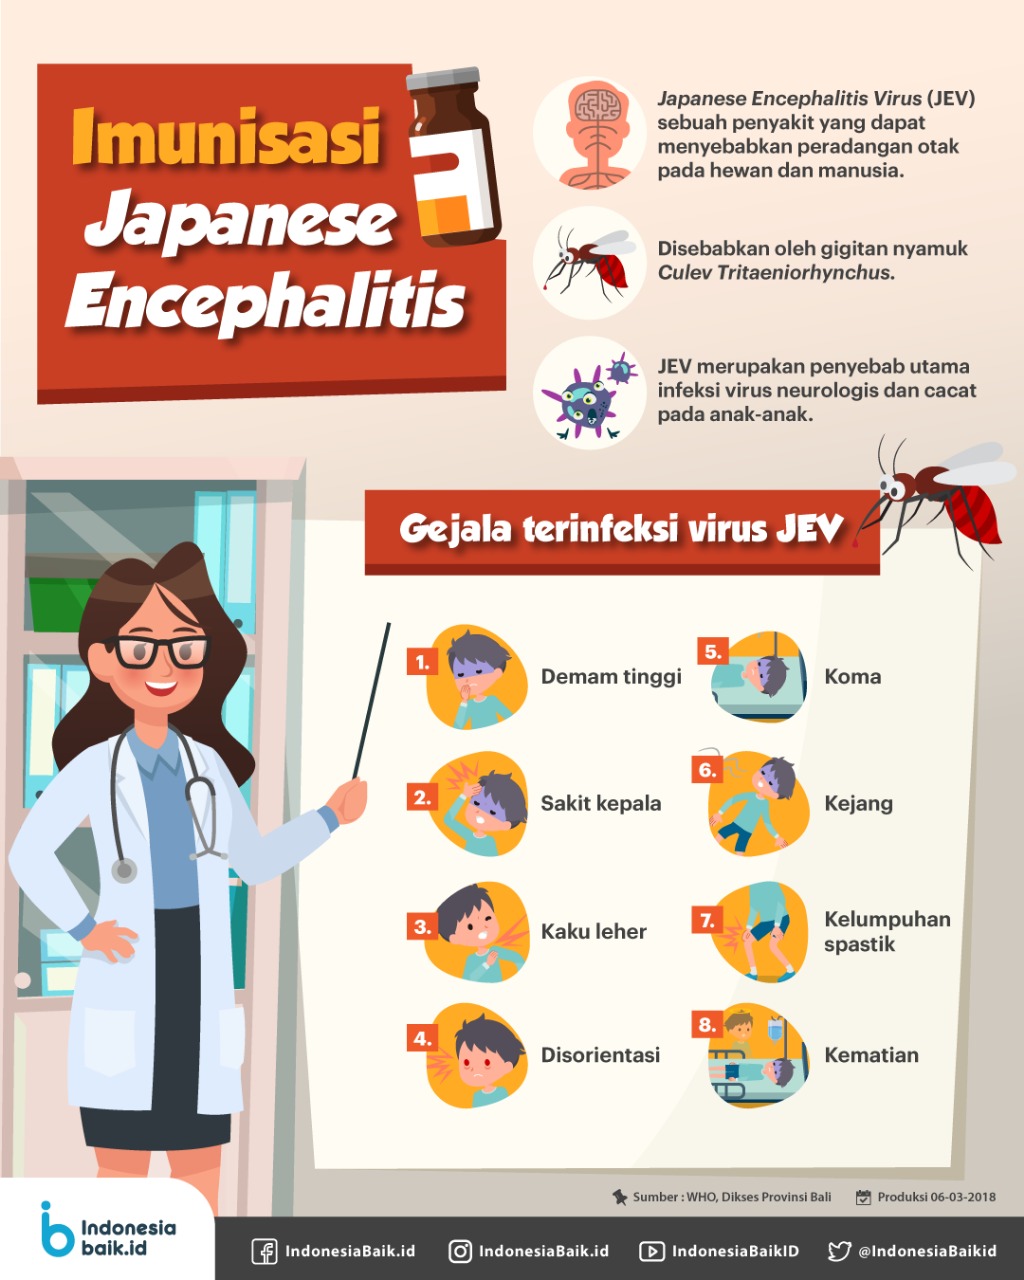 Imunisasi Japanese Encephalitis | Indonesia Baik